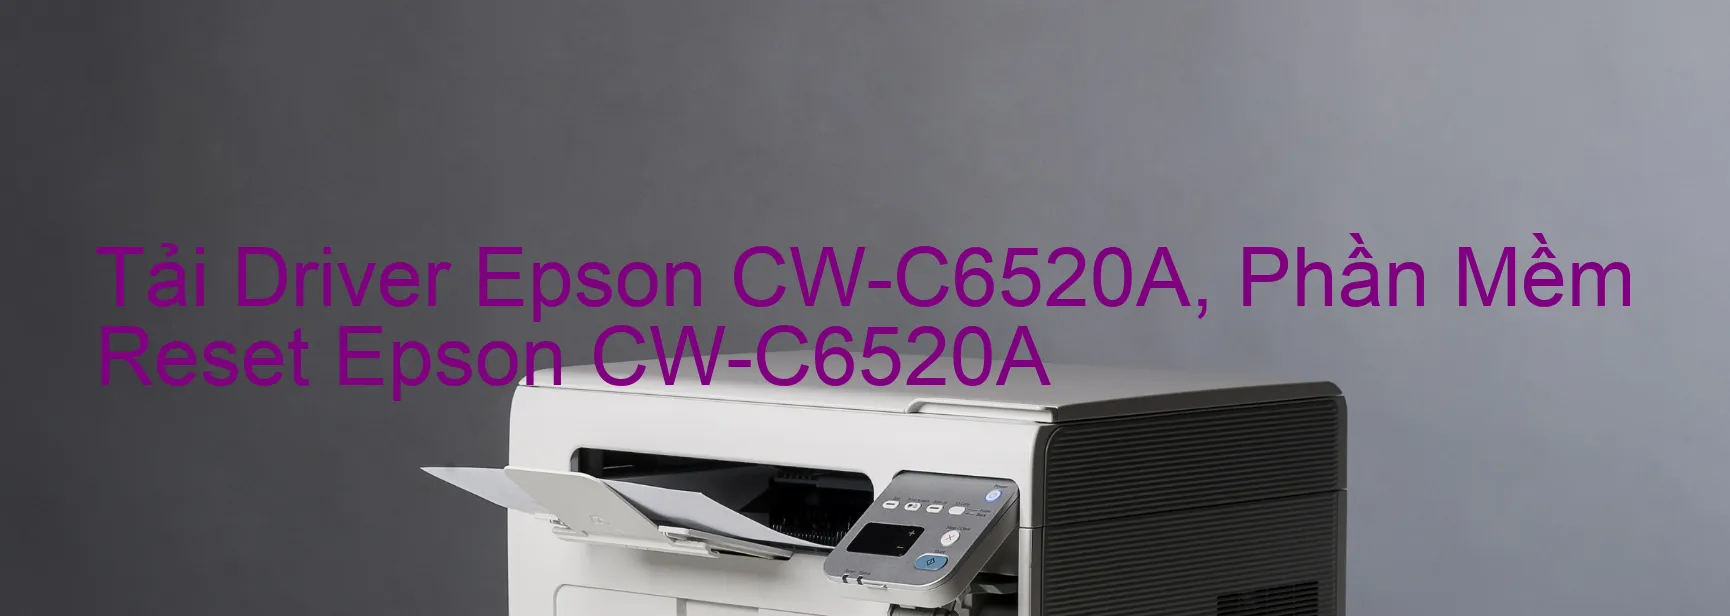 Driver Epson CW-C6520A, Phần Mềm Reset Epson CW-C6520A